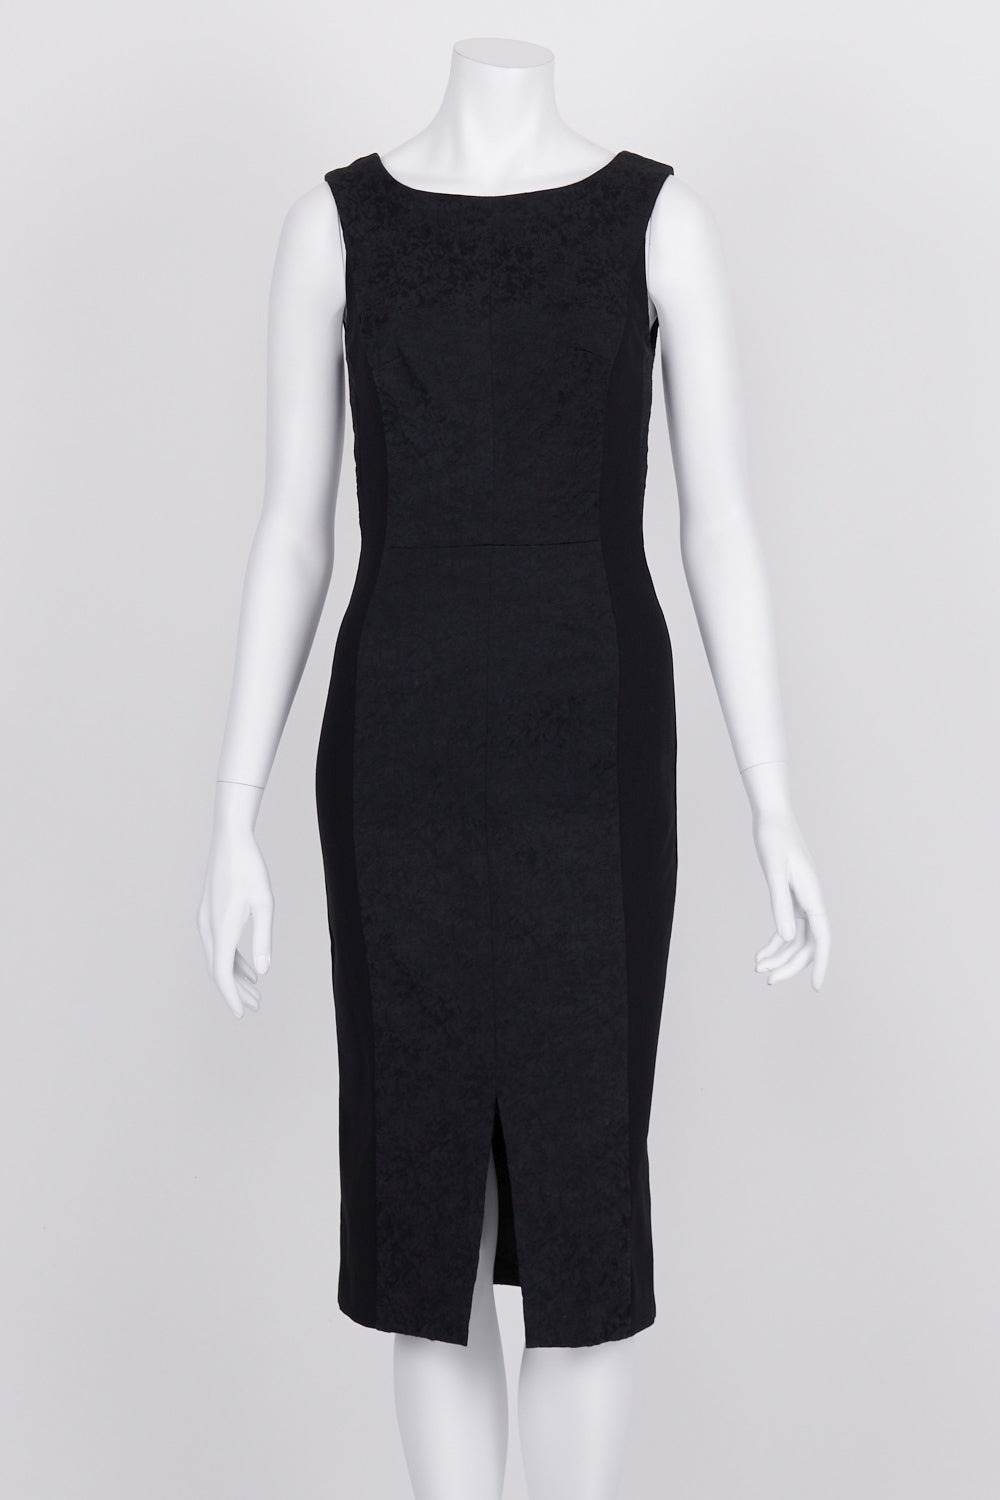 Veronika Maine Black Patterned Sleeveless Midi Dress 6